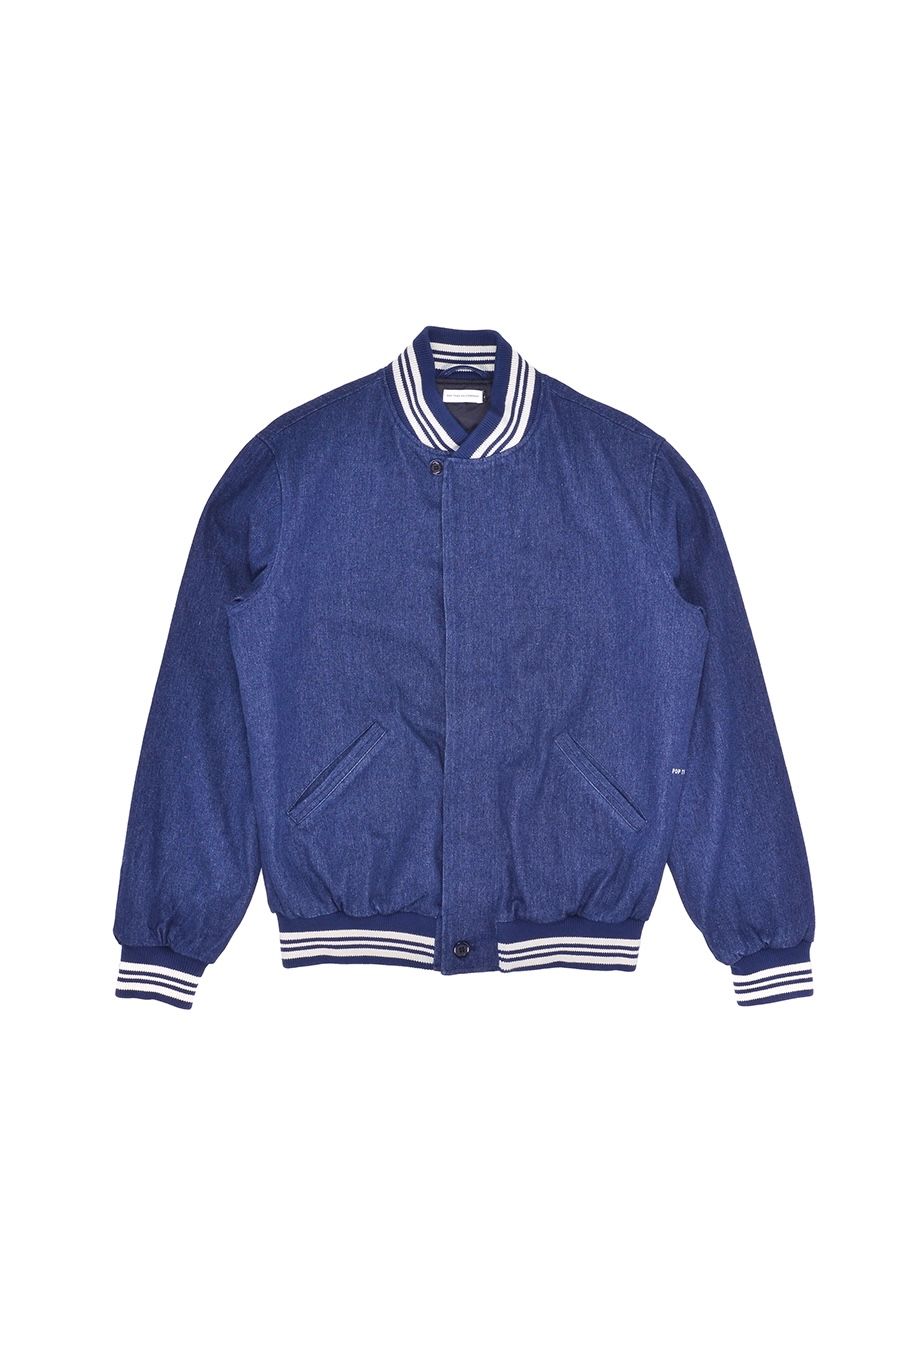 Pop Trading Company - varsity jacket -denim- 23ss drop1 | asterisk